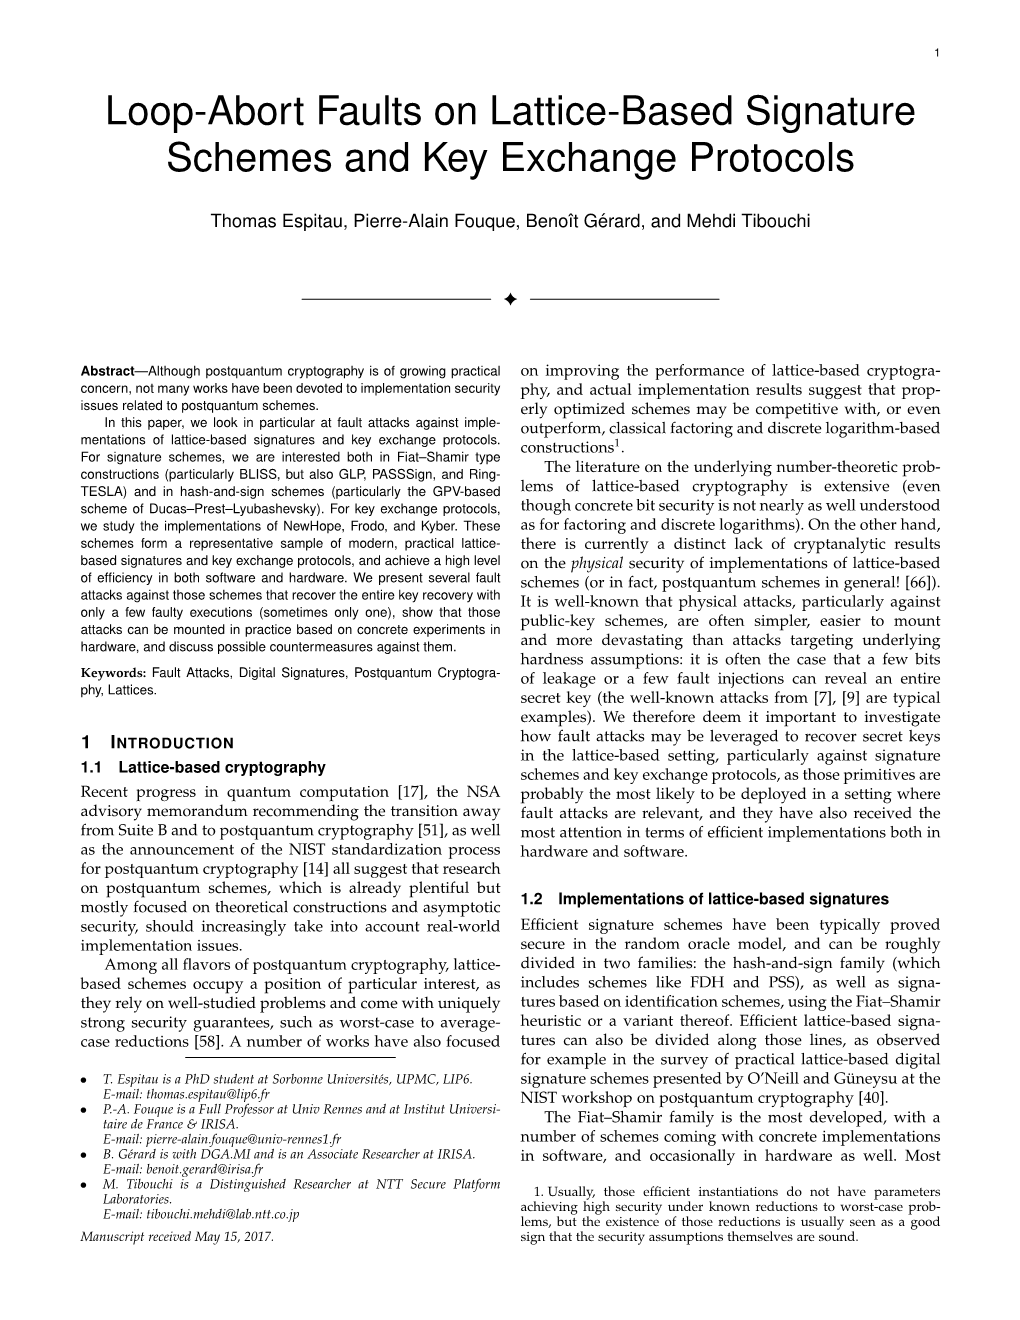 Loop-Abort Faults on Lattice-Based Signature Schemes and Key Exchange Protocols